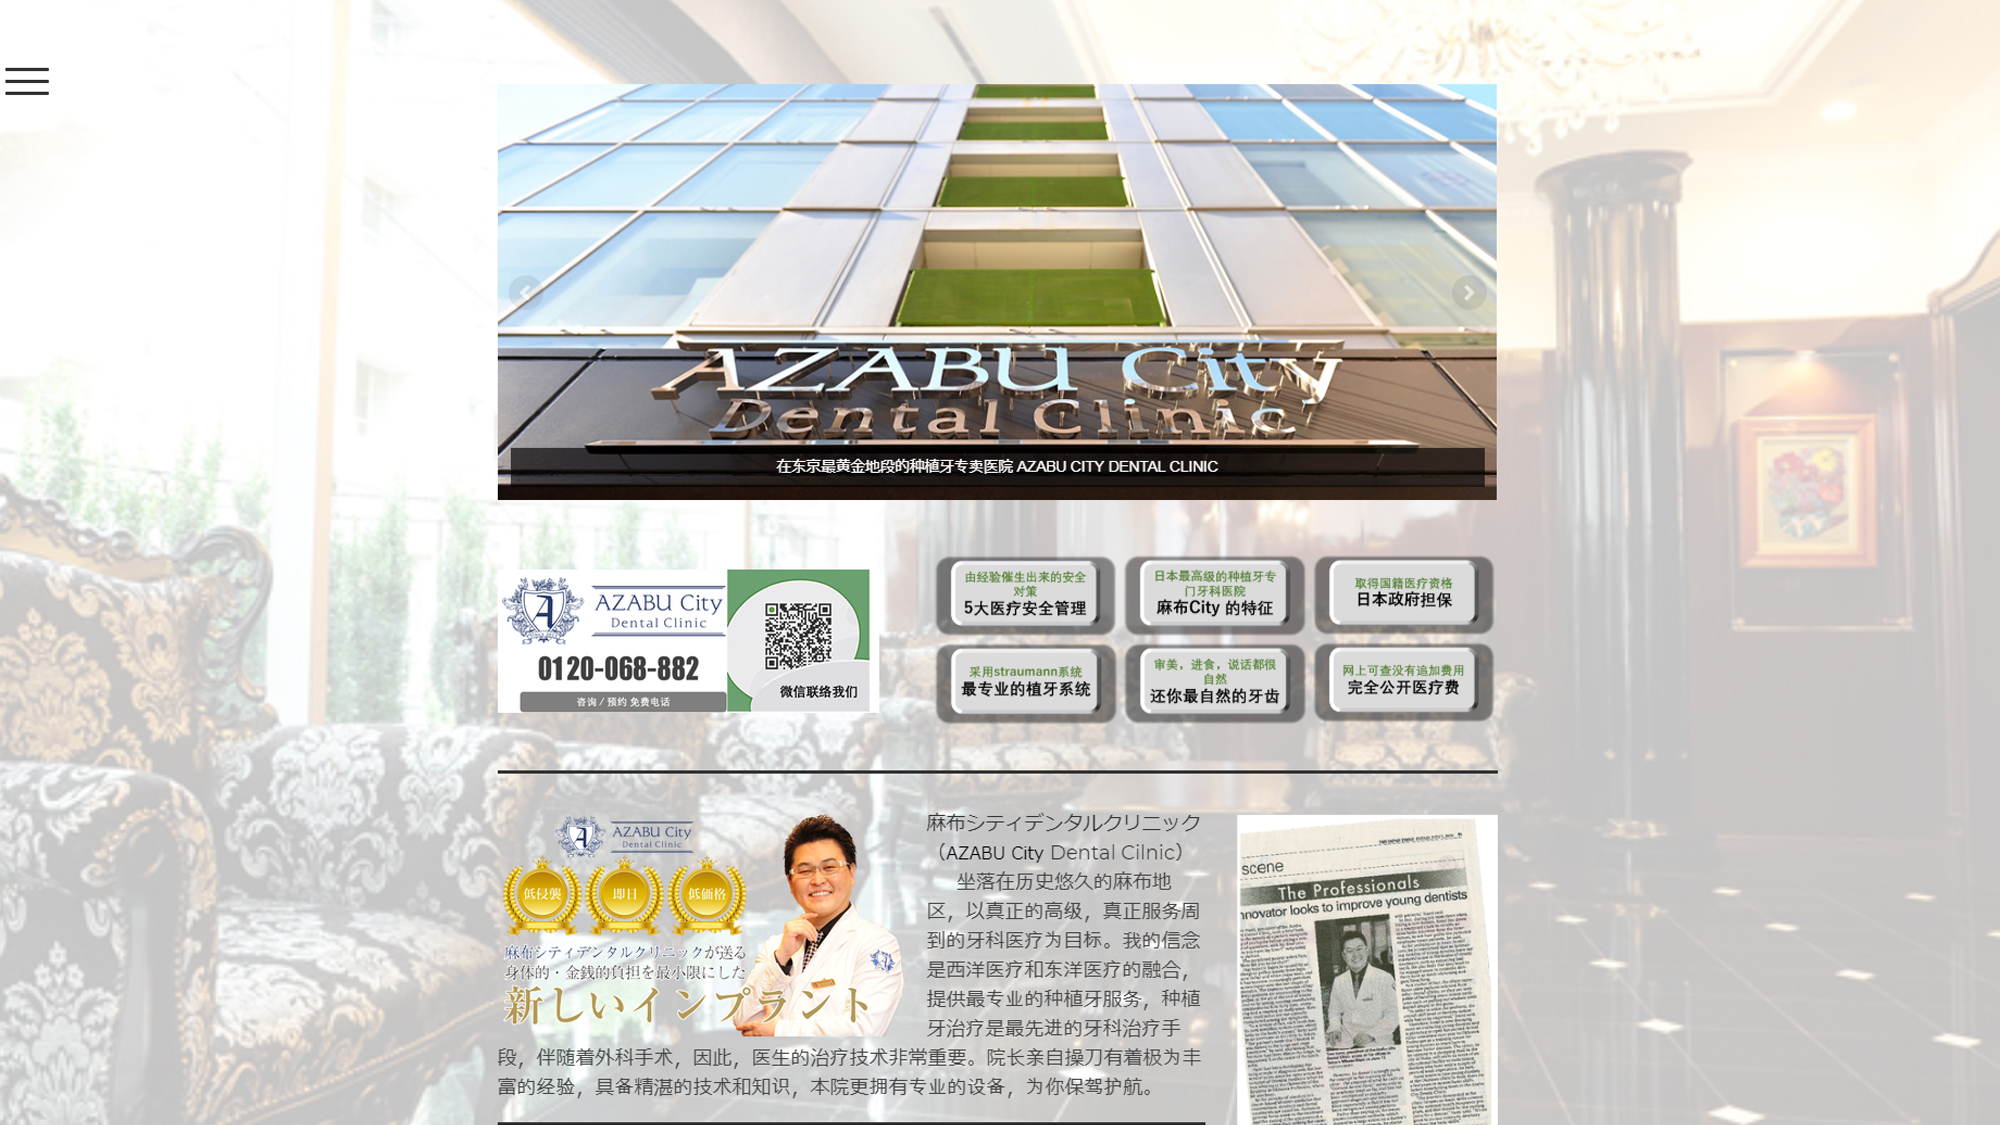 AZABU City Dental Clinic

